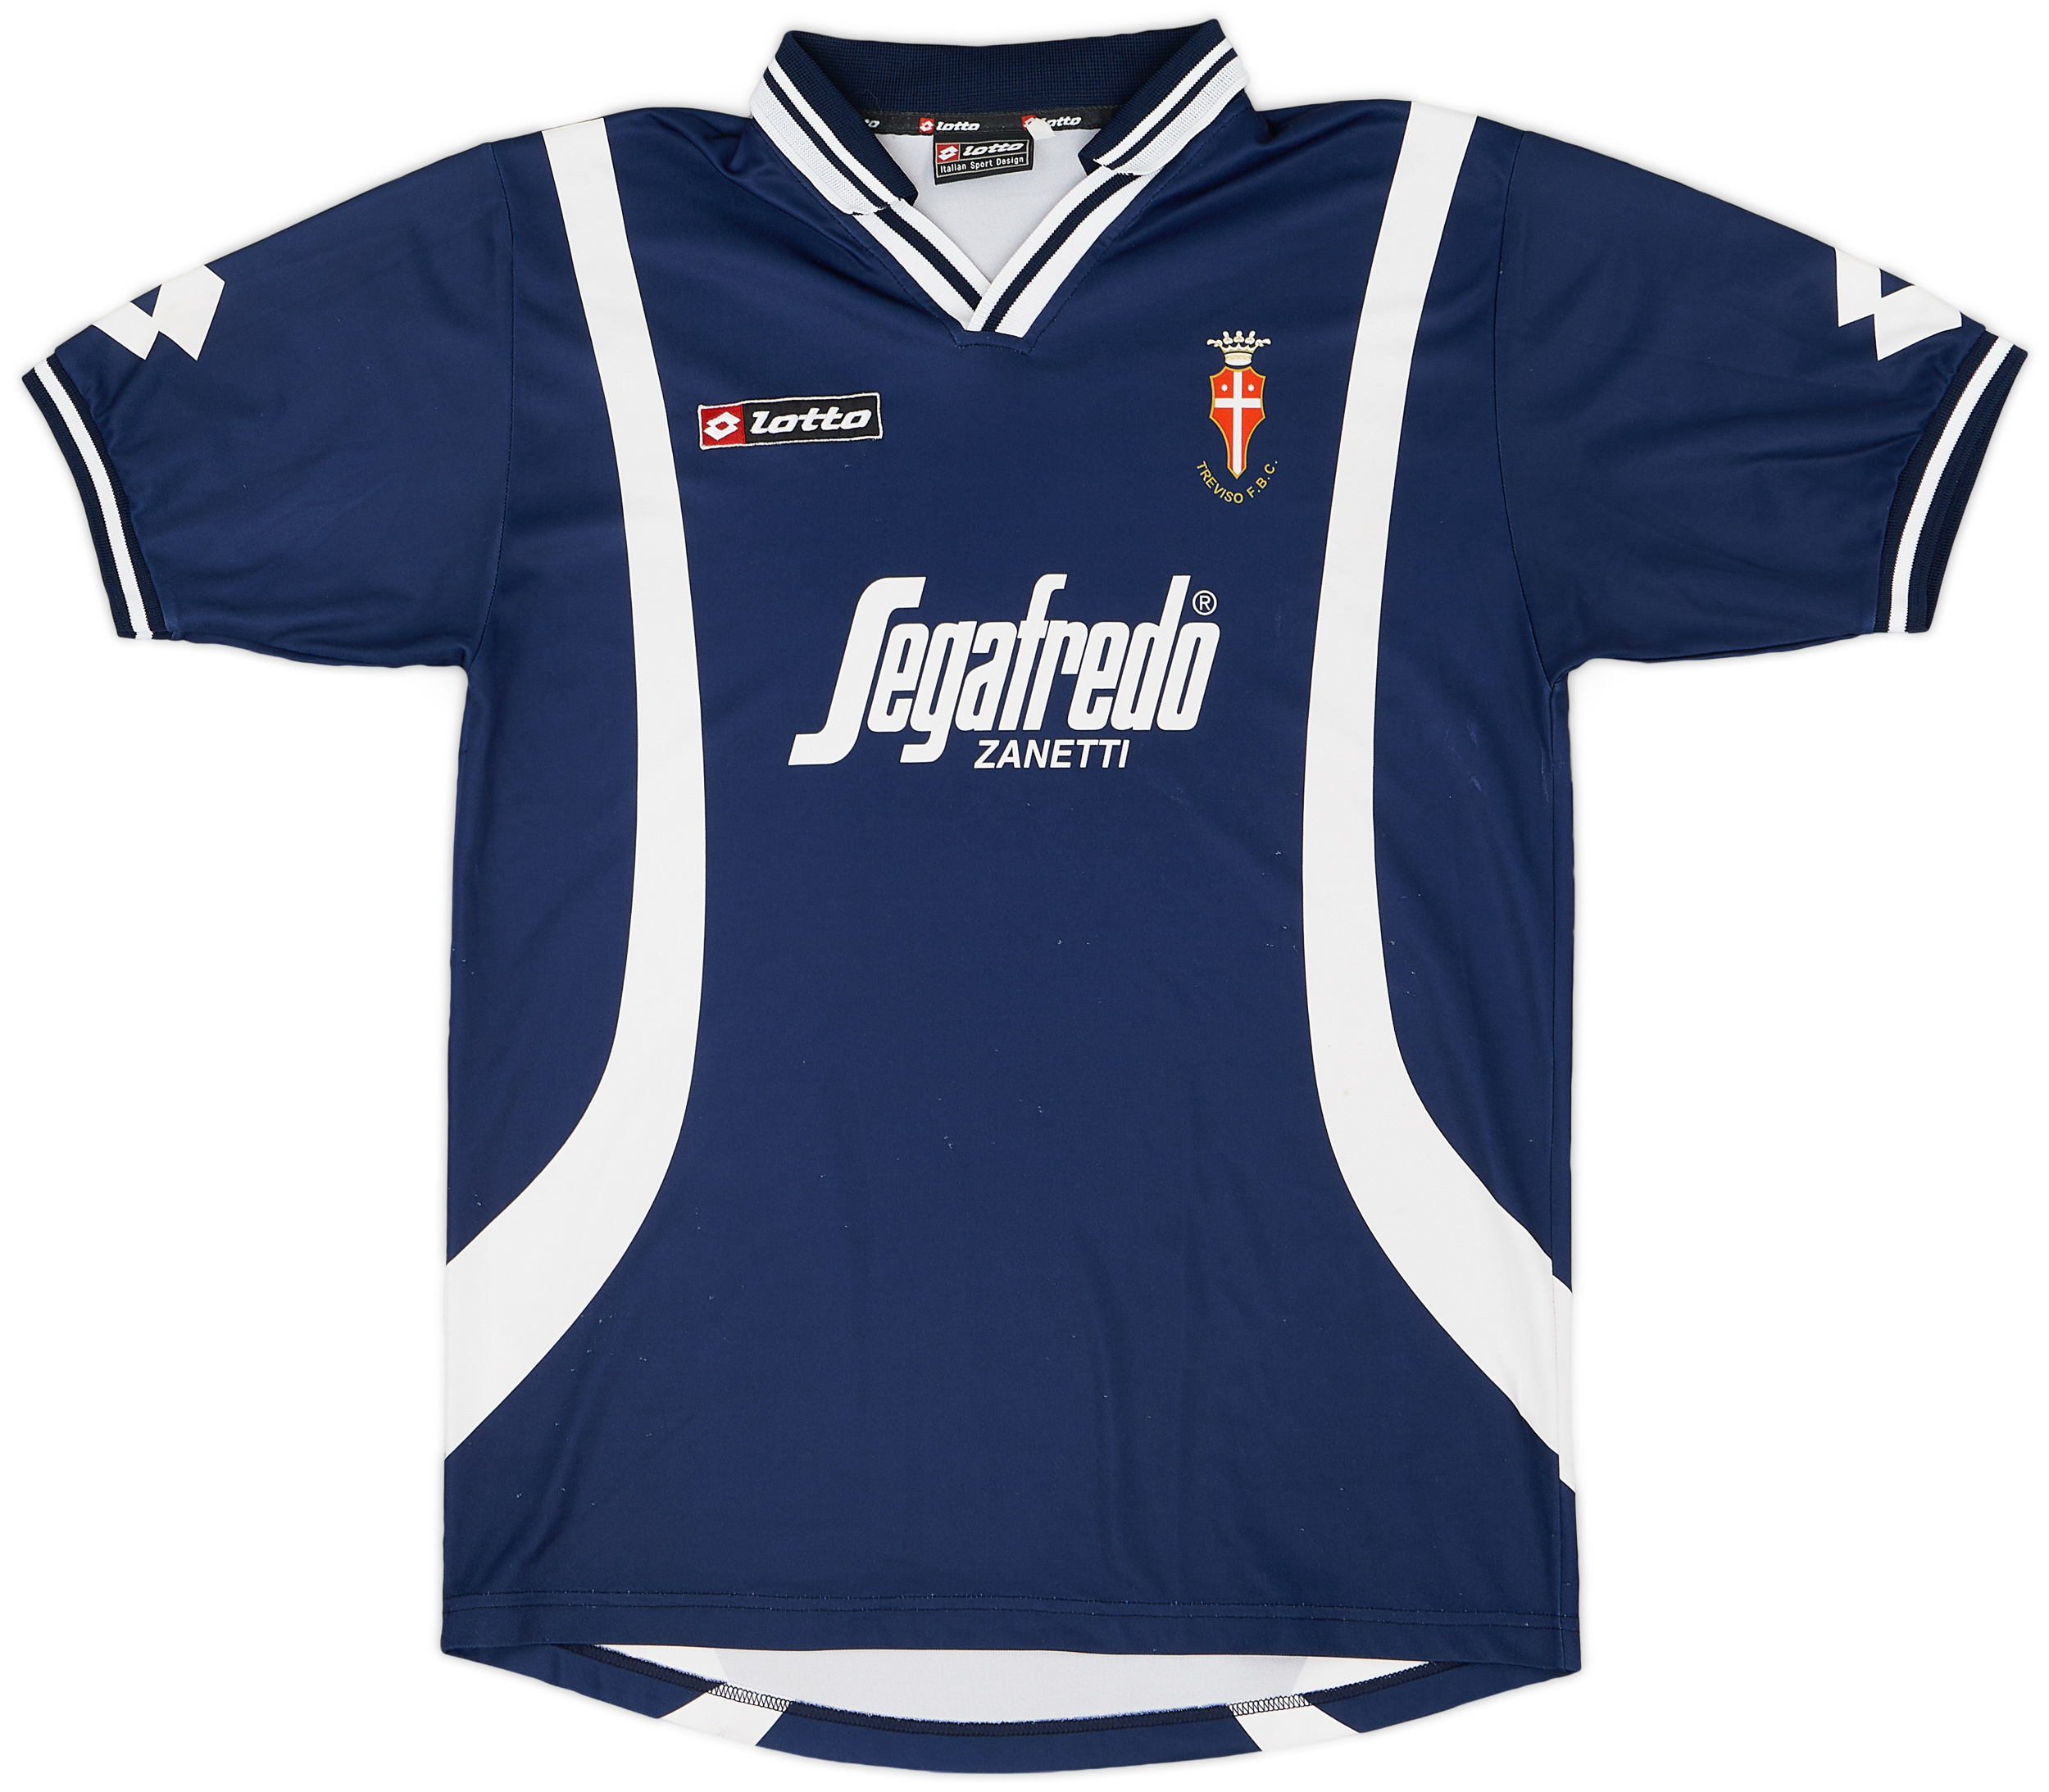 ACD Treviso 2013  Uit  shirt  (Original)